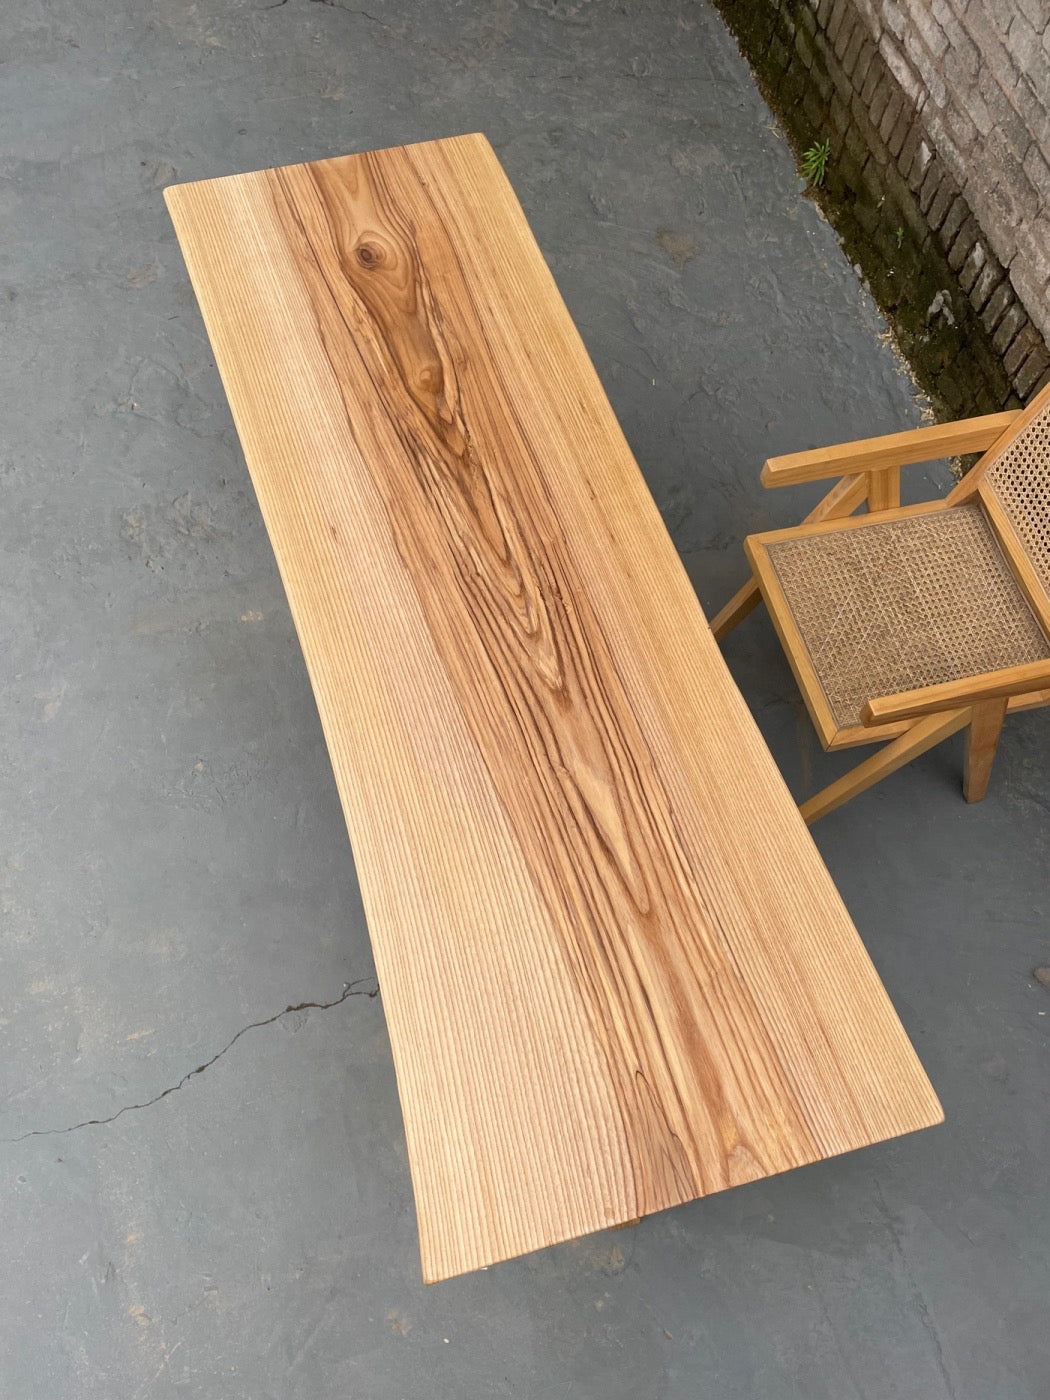 Ash slab coffee table, North American Ash wood slab